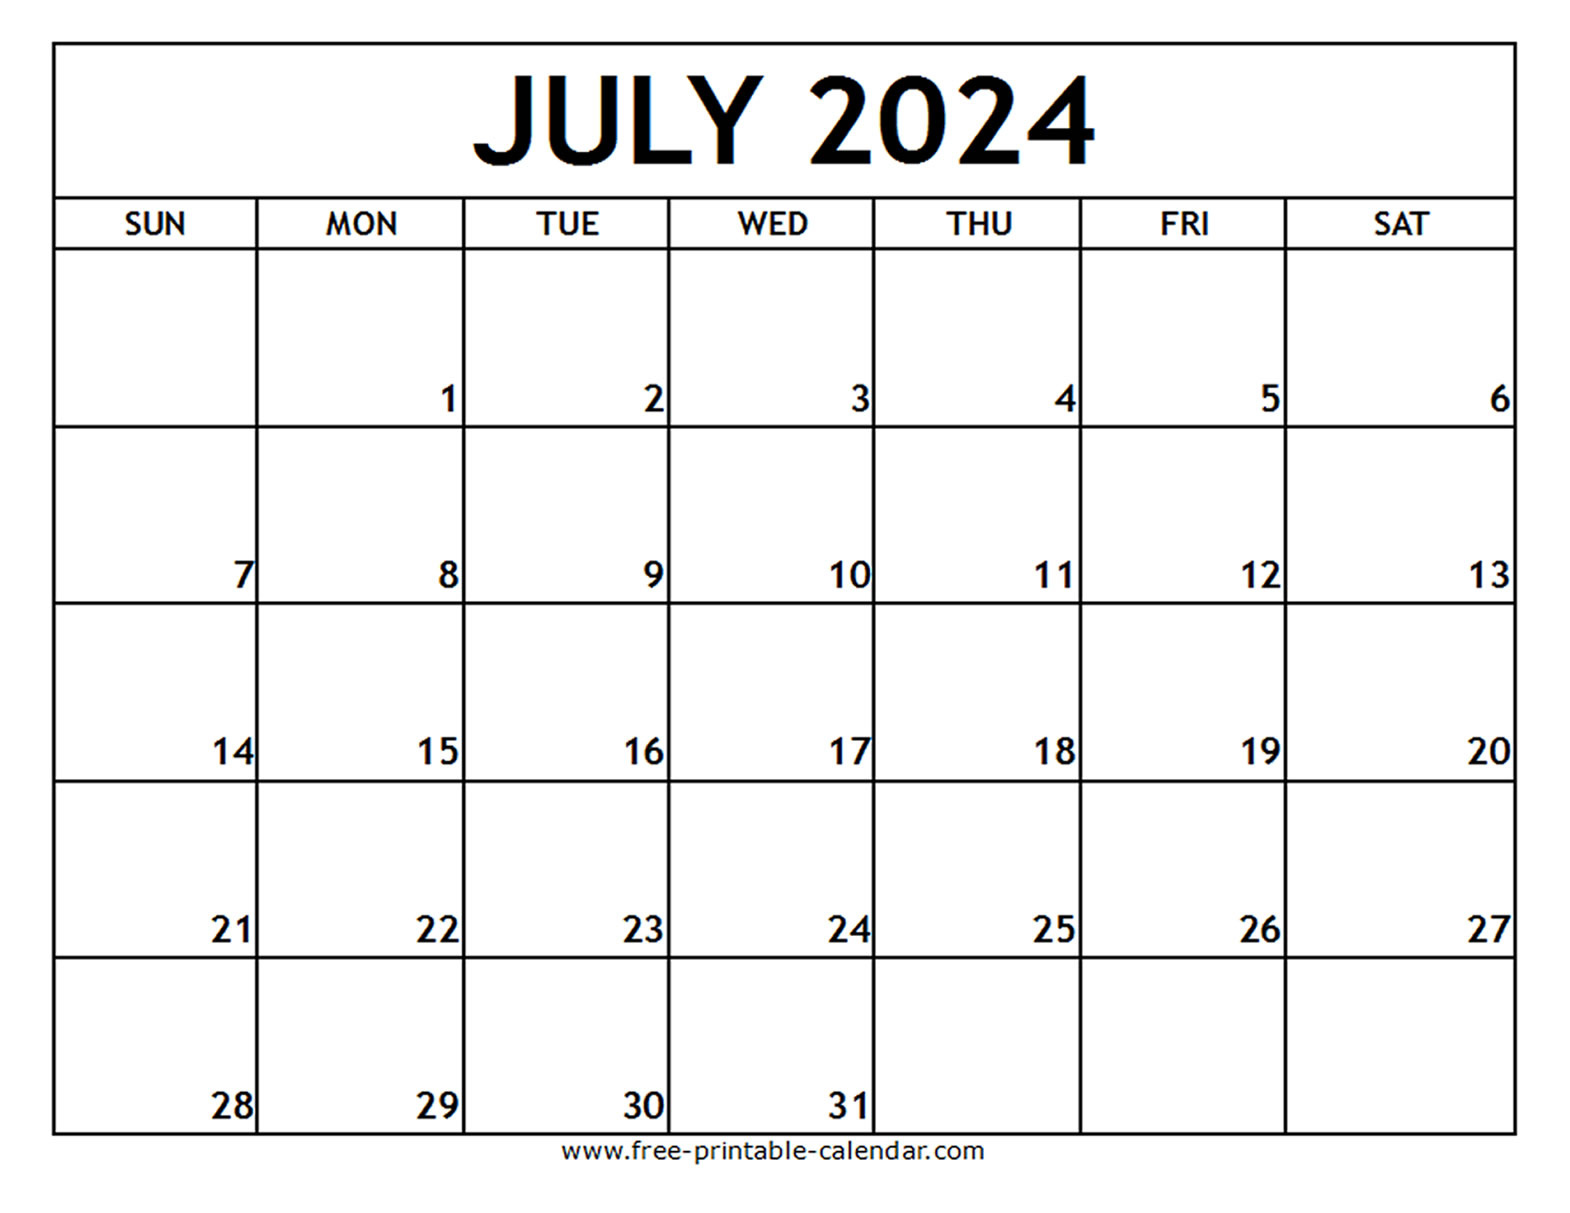 July 2024 Printable Calendar - Free-Printable-Calendar pertaining to Printable July 2024 Calendar Free